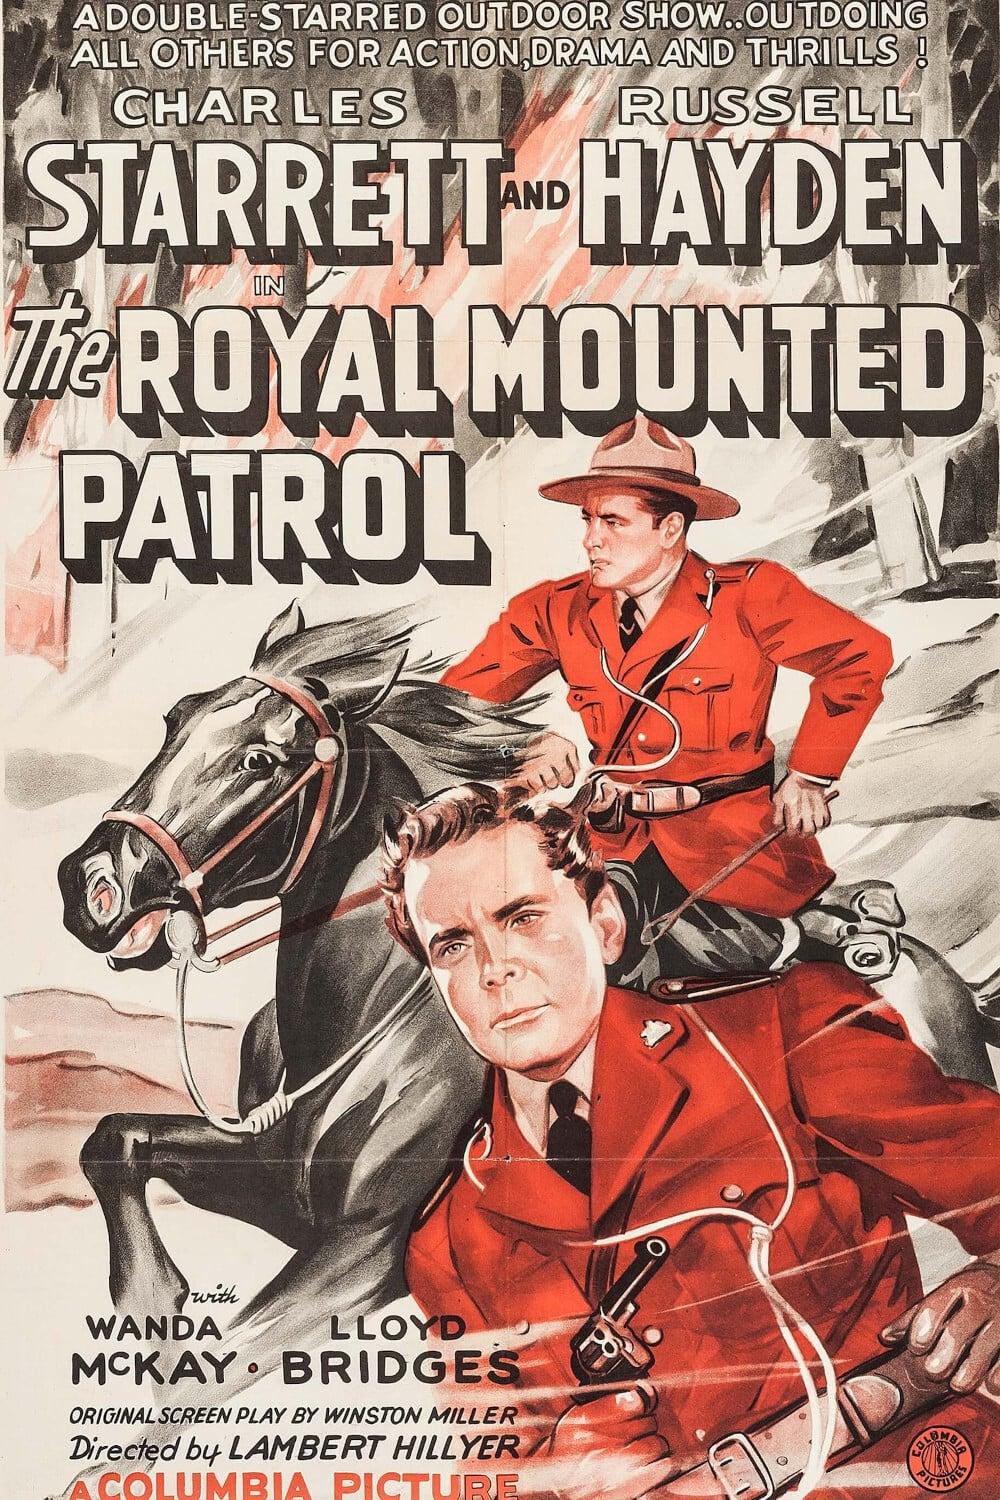 The Royal Mounted Patrol poster